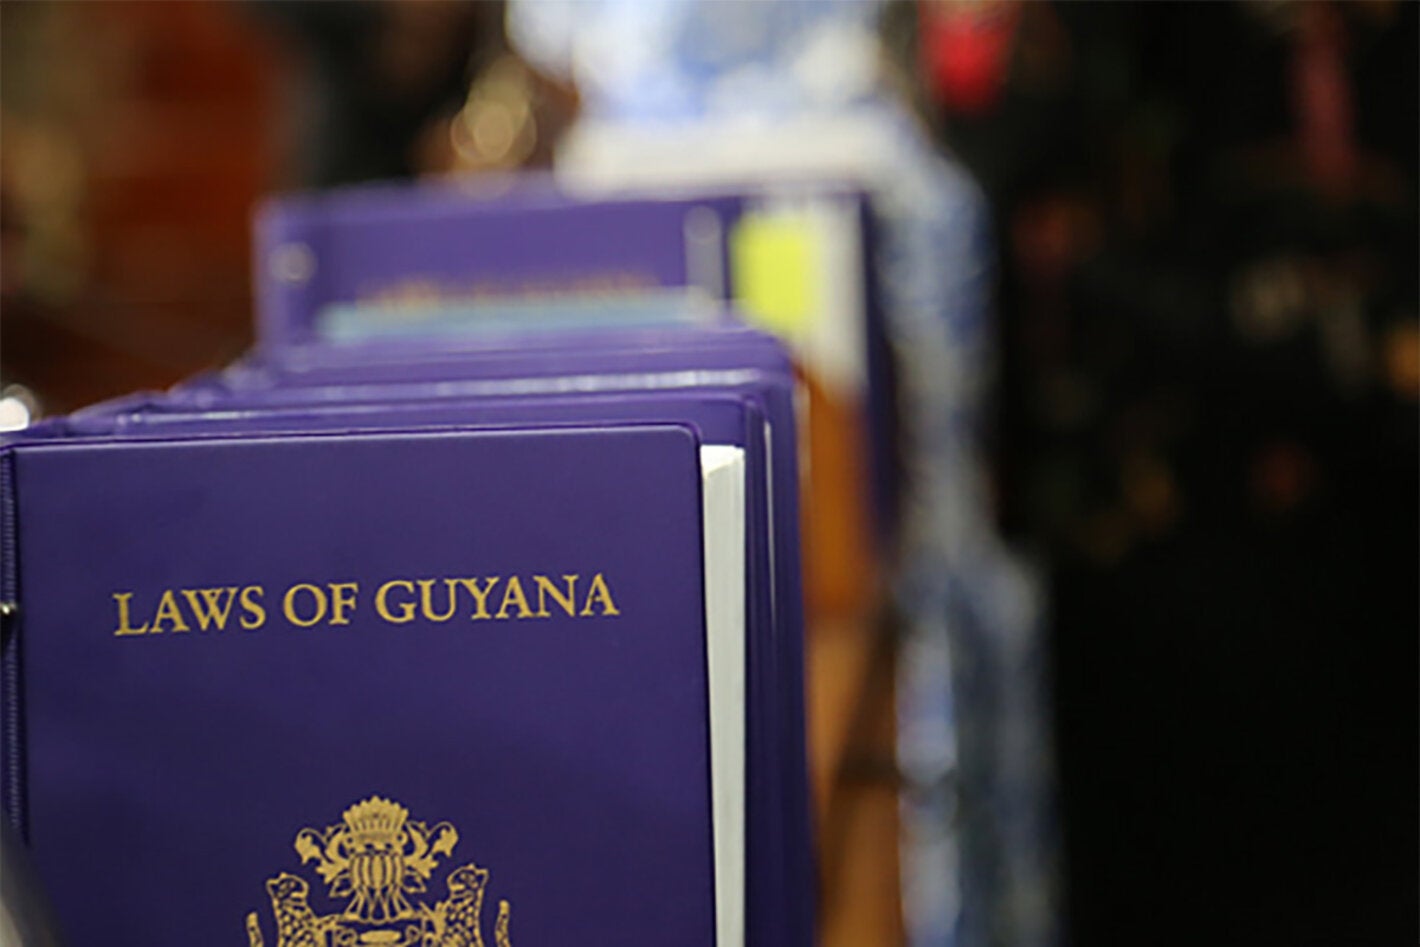 guyana law book